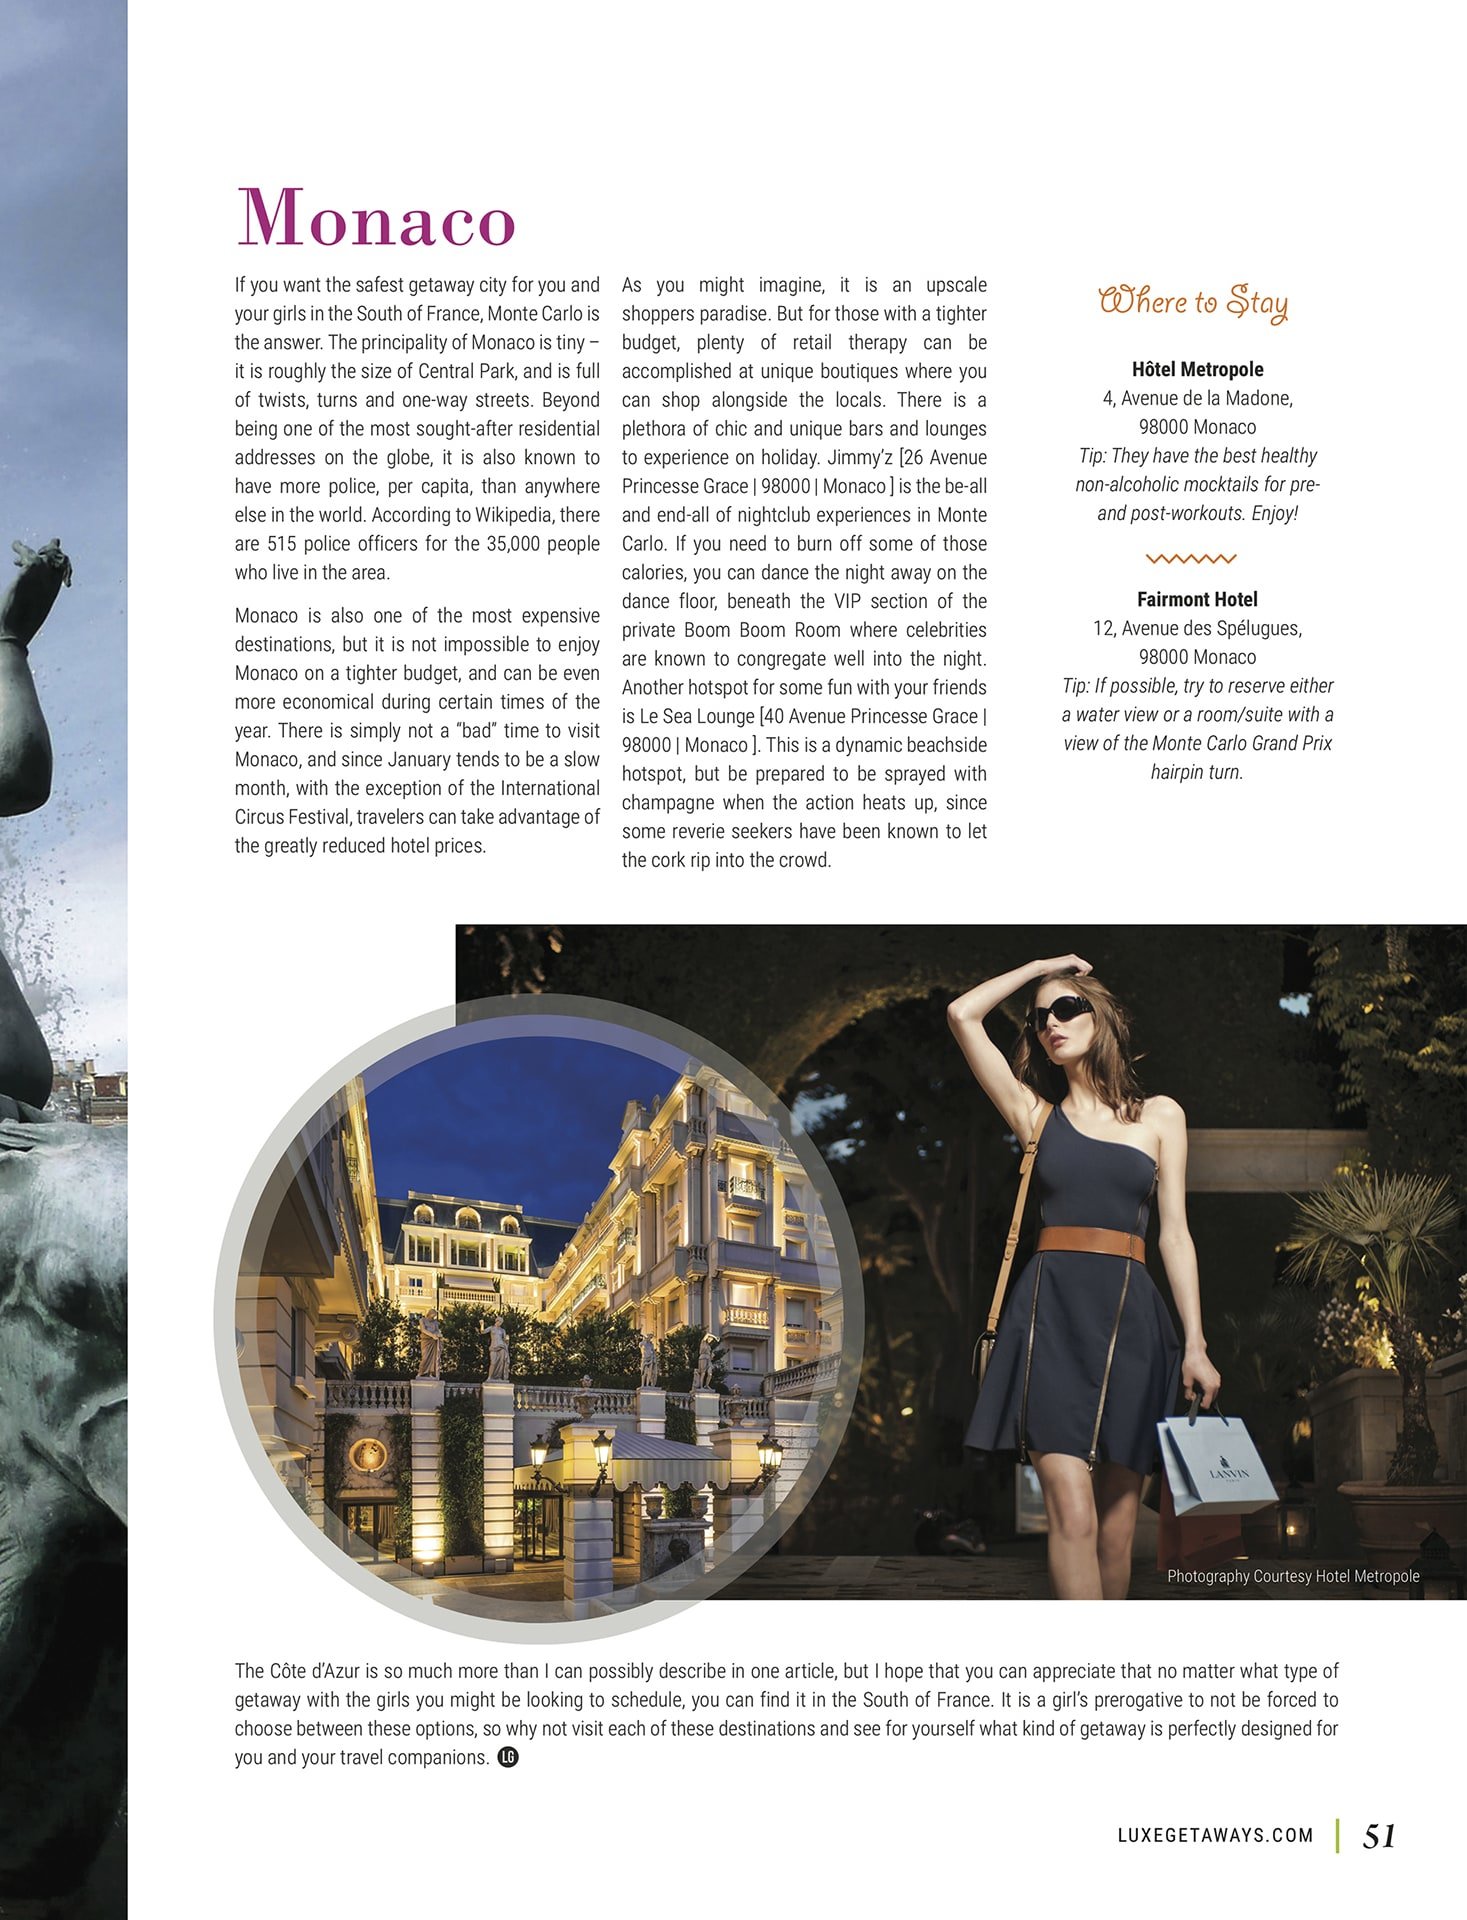 LuxeGetaways - Luxury Travel - Luxury Travel Magazine - Luxe Getaways - Luxury Lifestyle - Digital Travel Magazine - Travel Magazine - Girls Getaway to Cote d'Azur - Priscilla Pilon - Monaco Magazine Feature